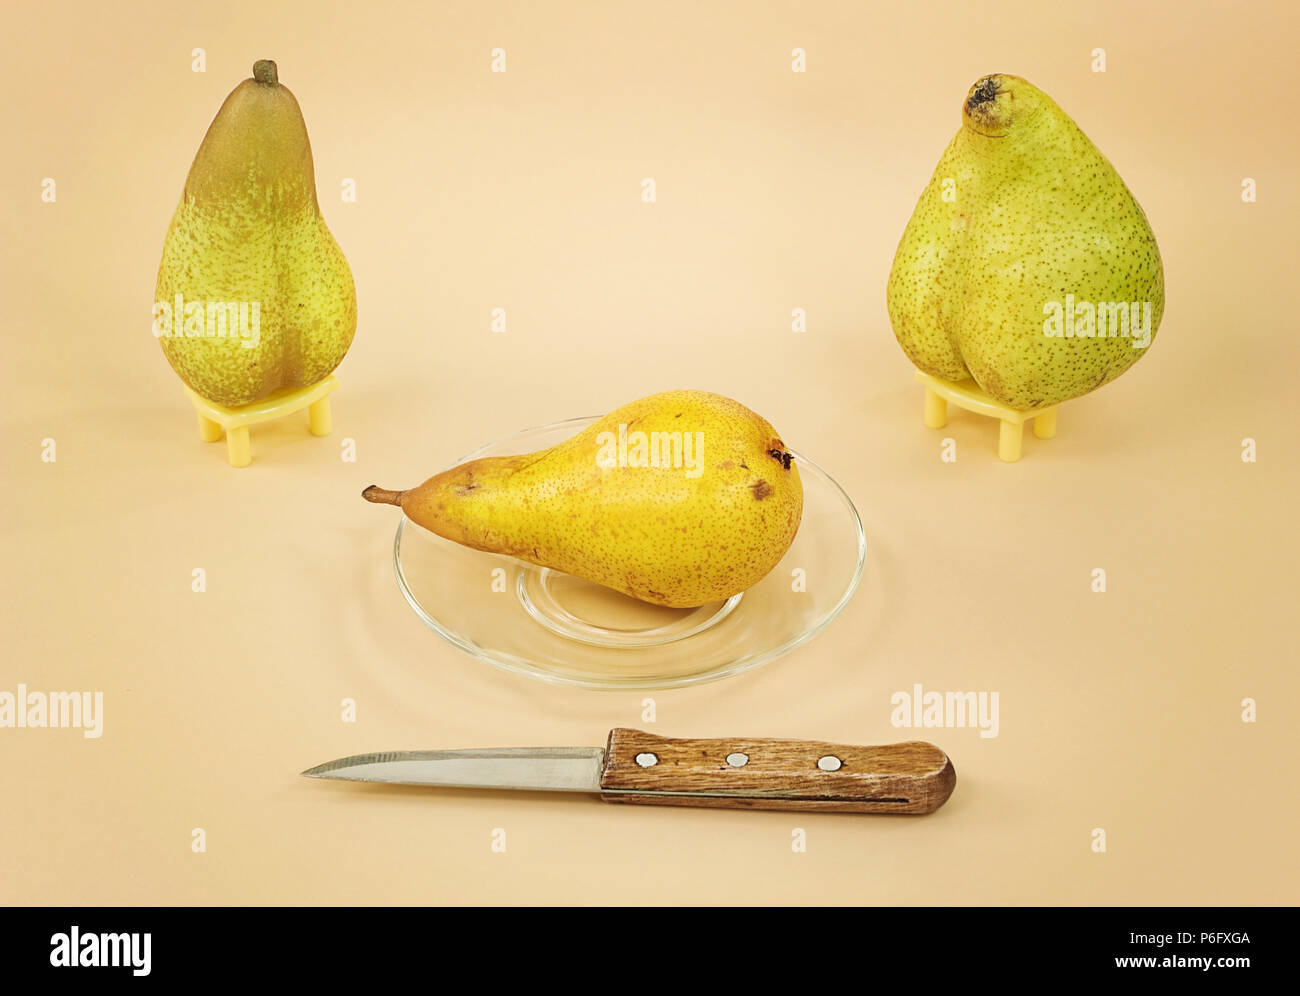 Sad farewell with the ripe pear Stock Photo